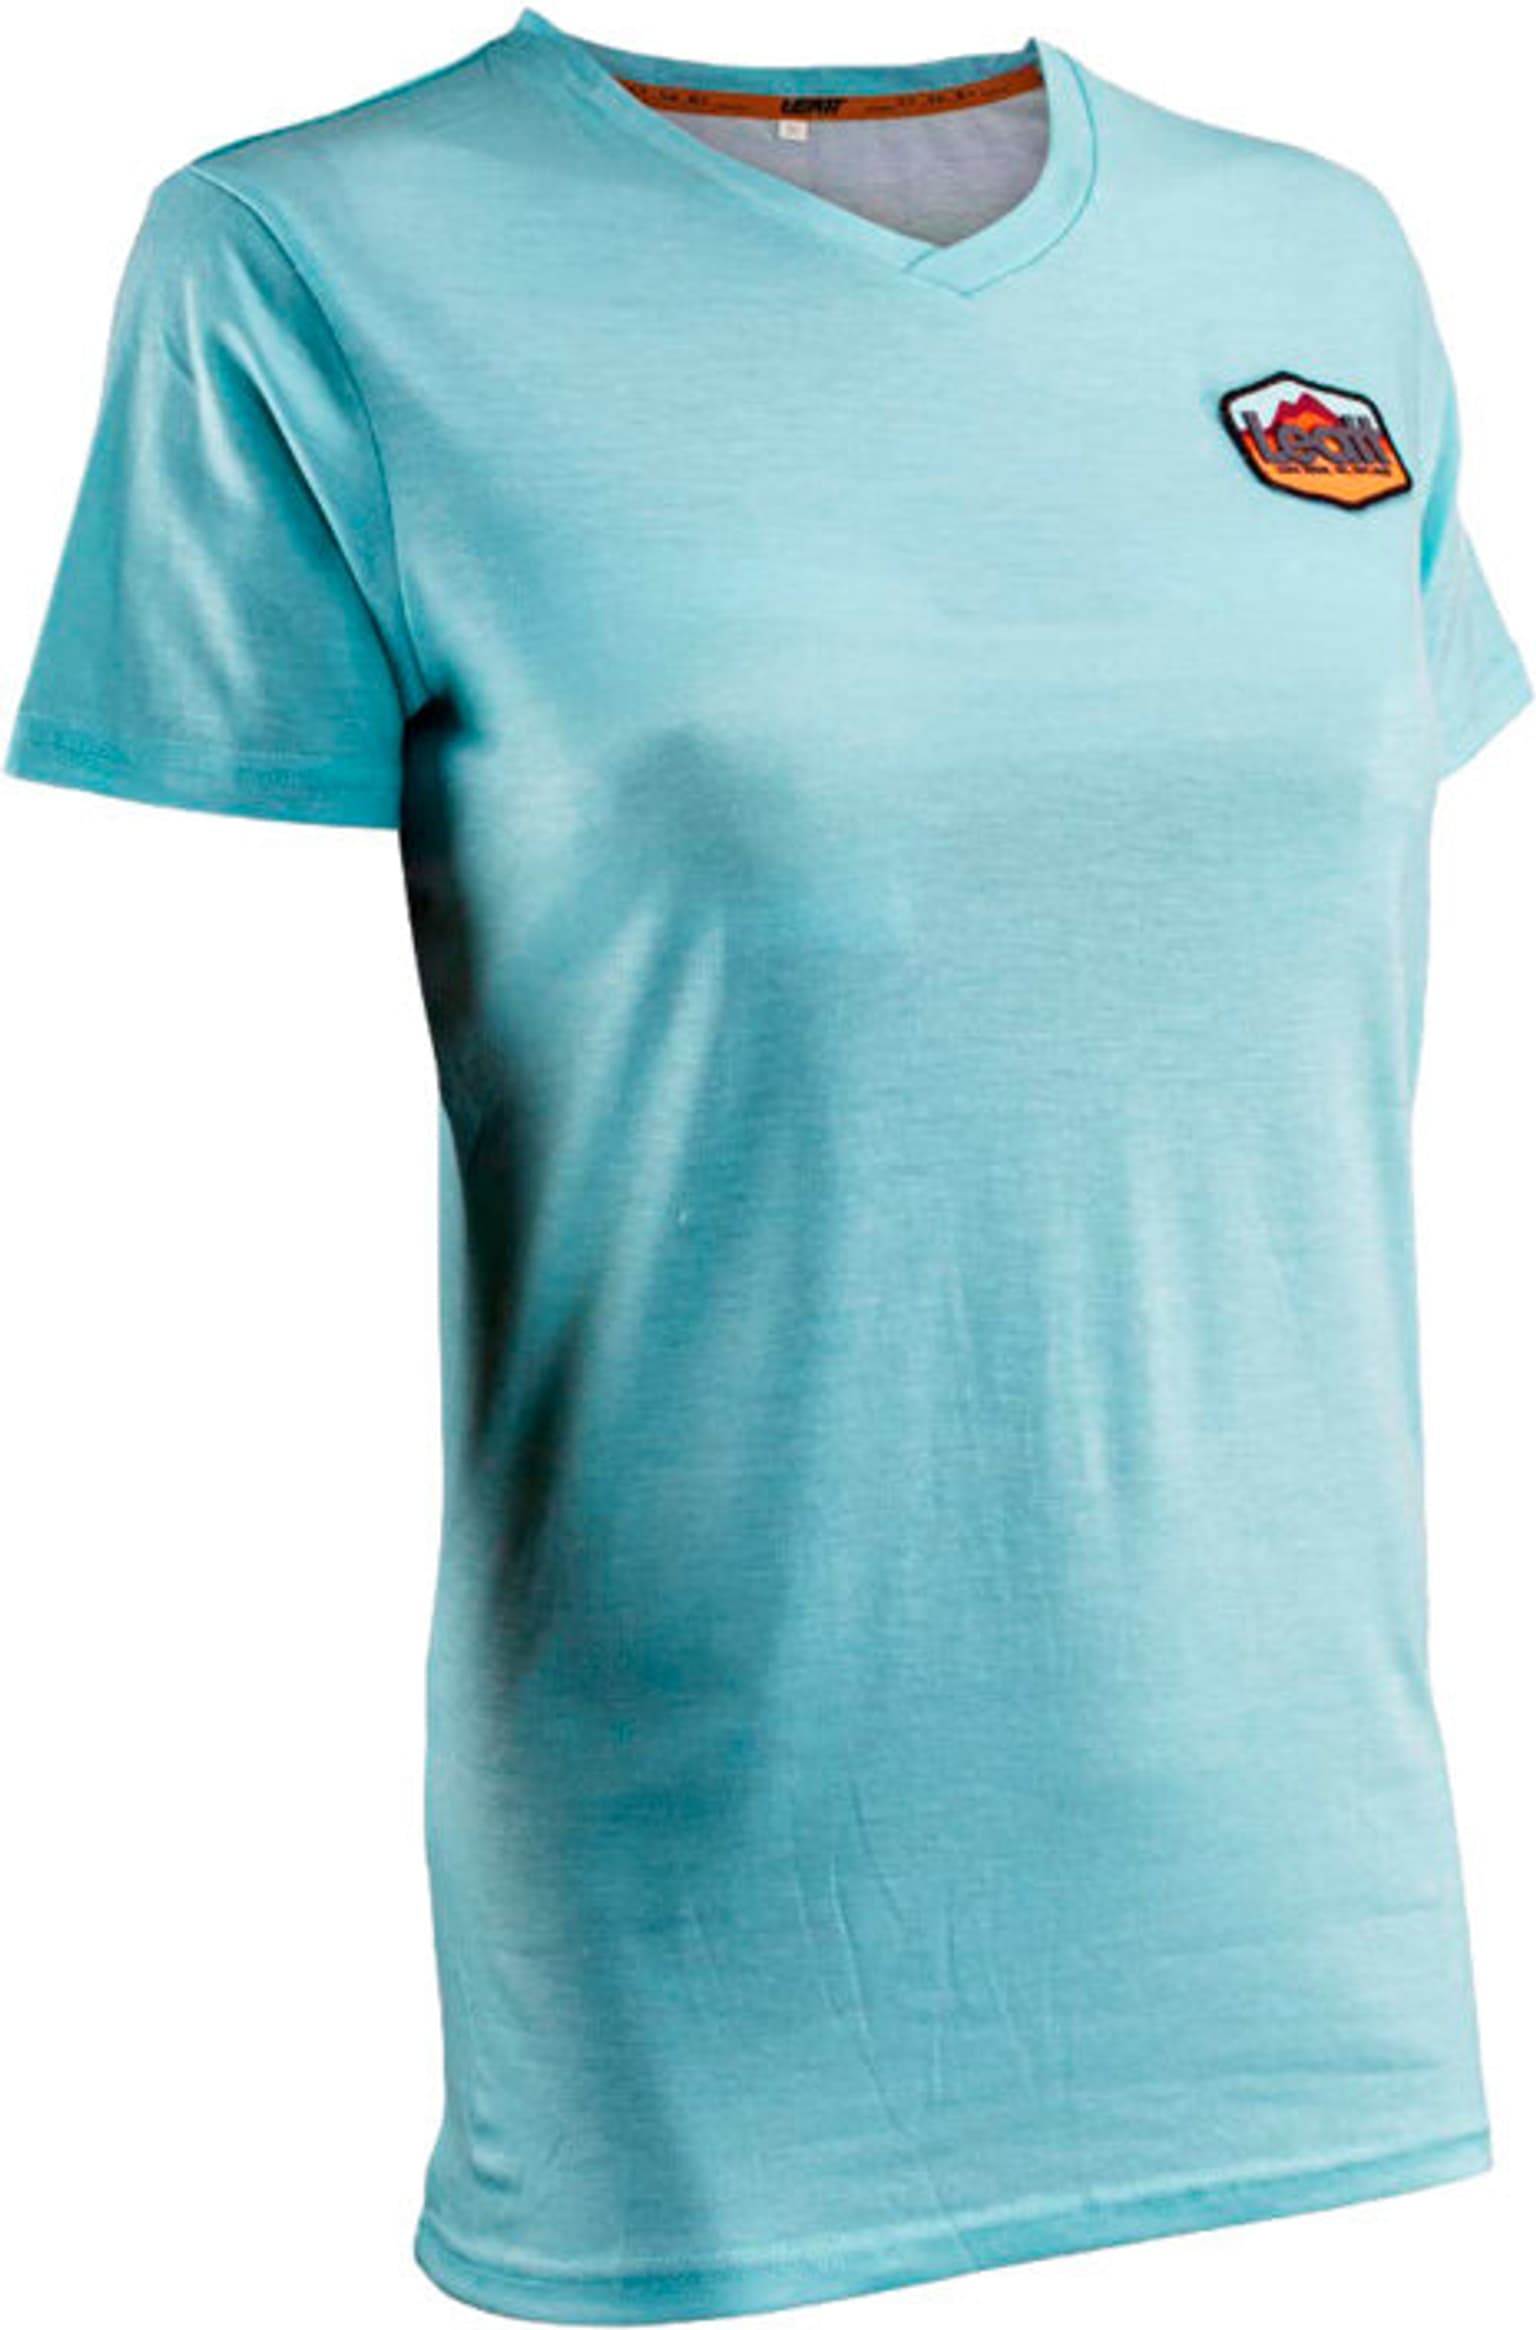 Leatt Leatt Premium T-Shirt Women T-shirt acqua 1